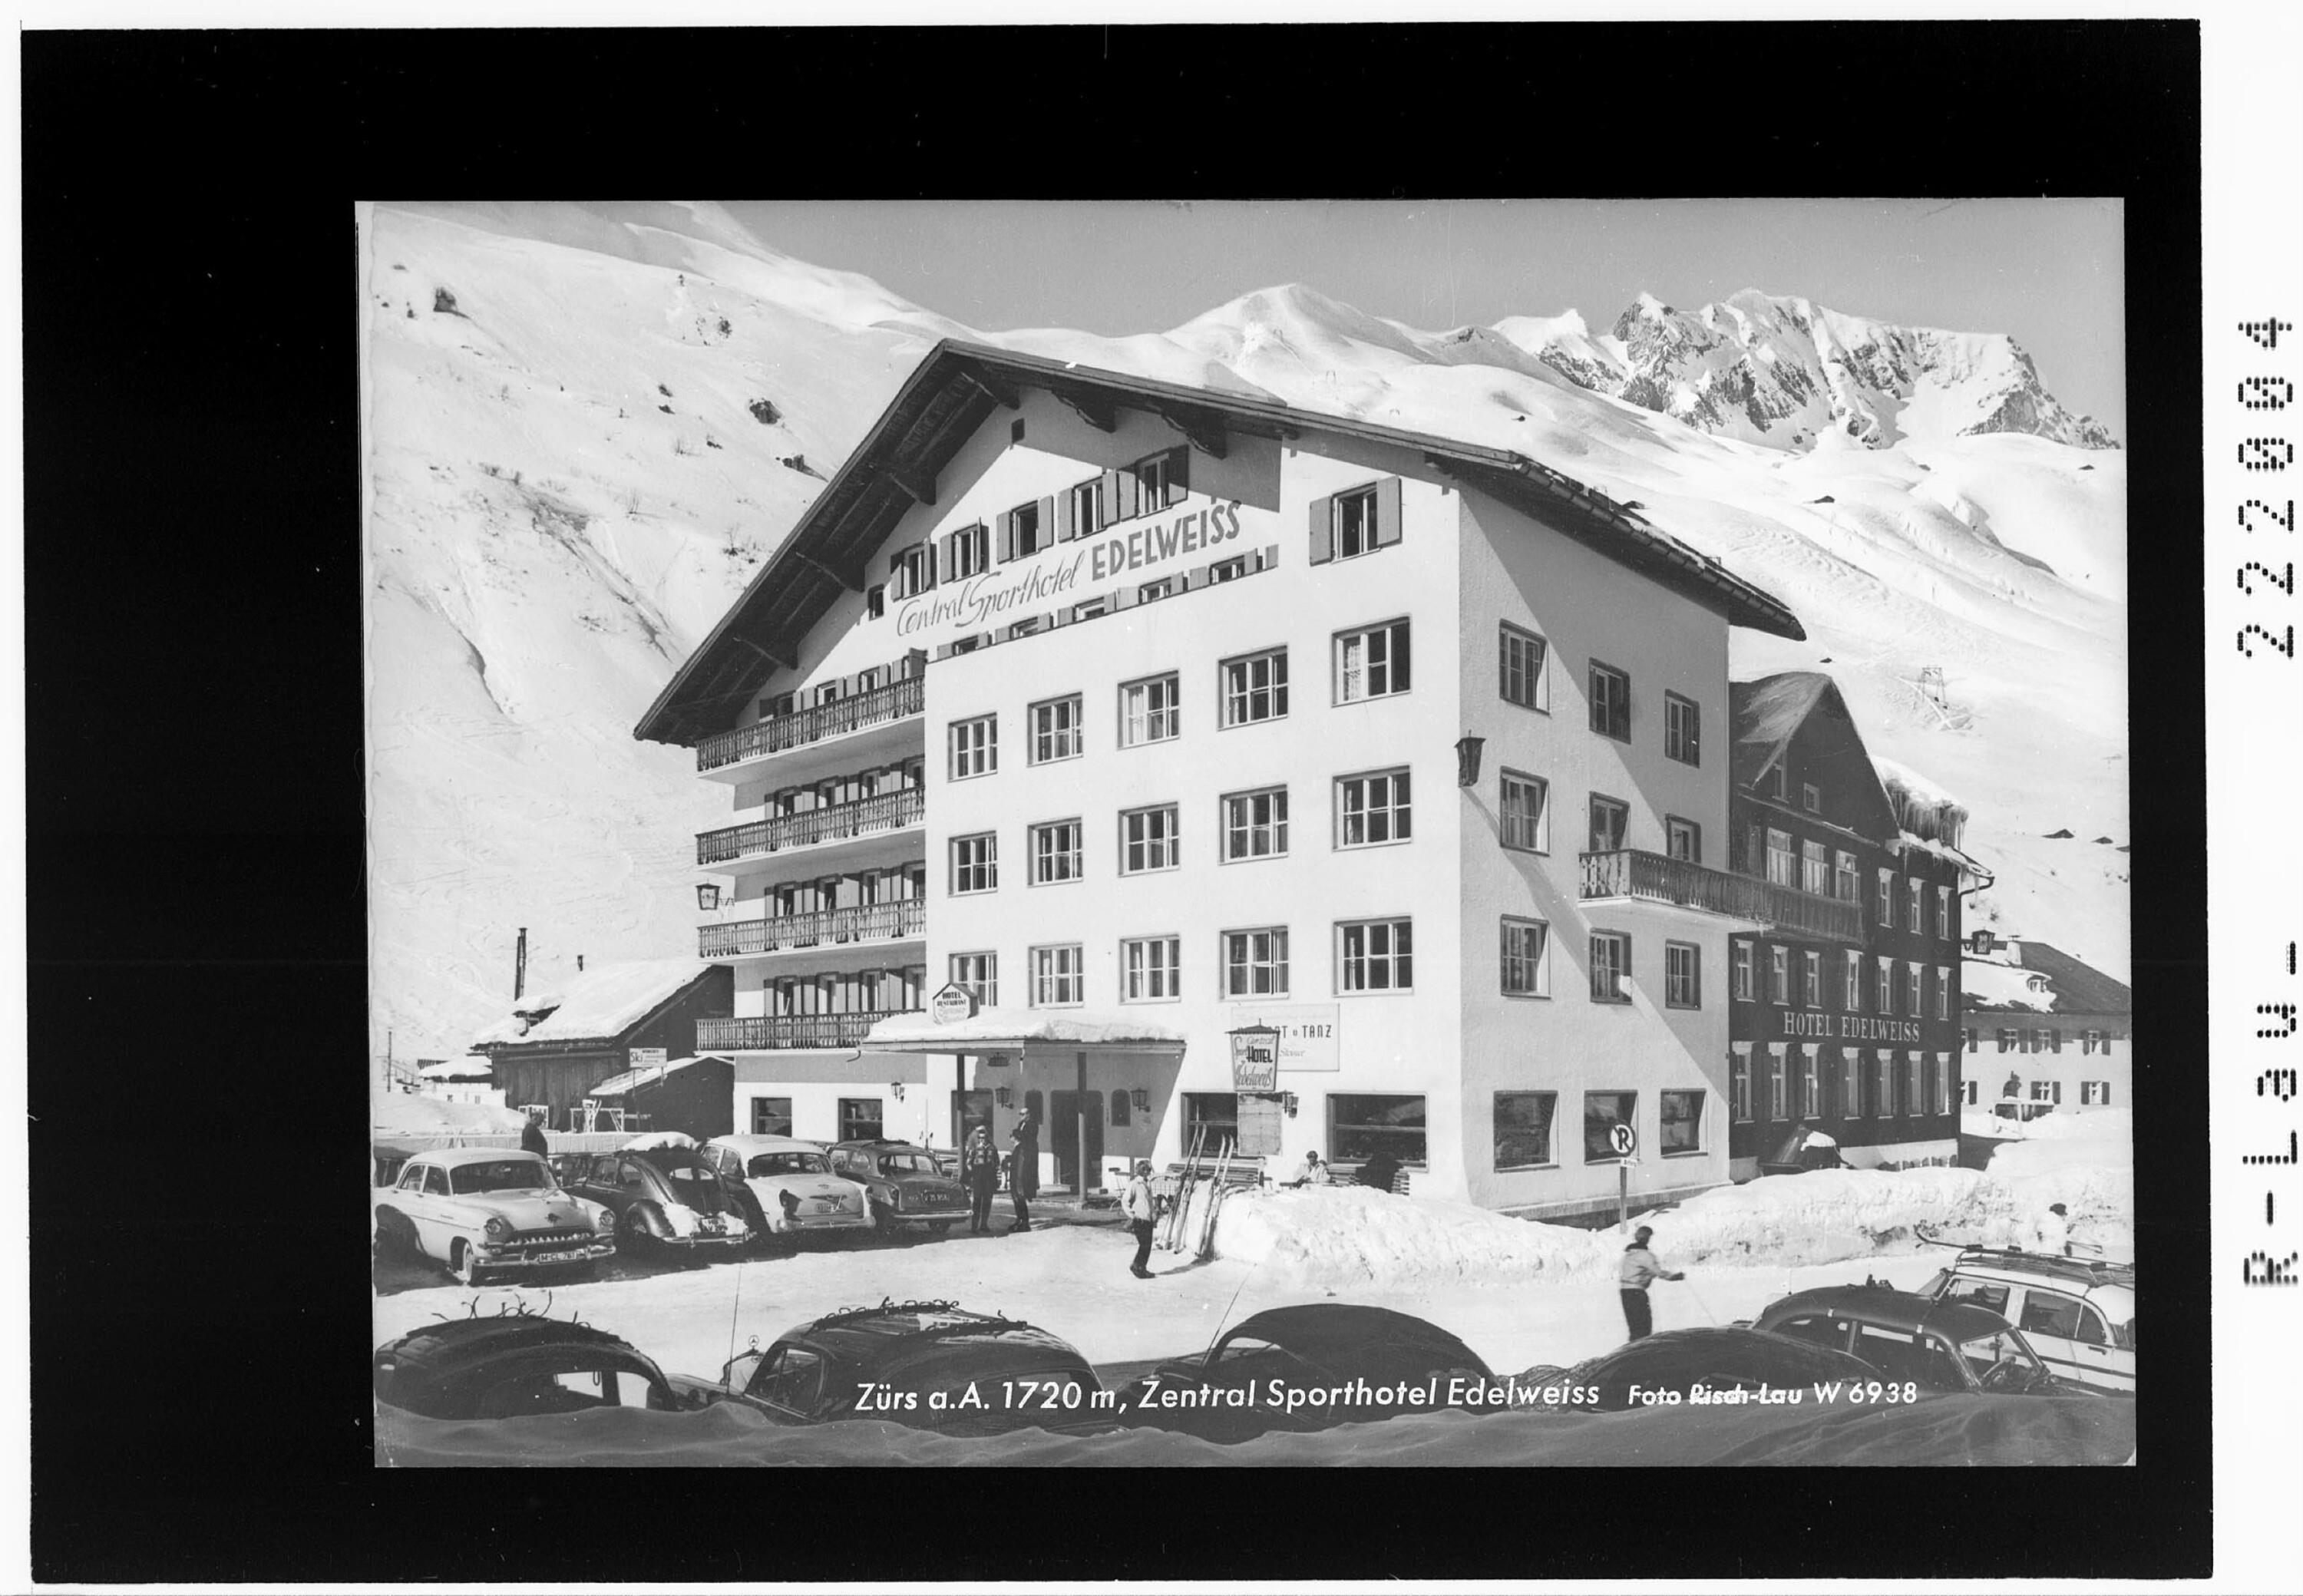 Zürs am Arlberg 1720 m / Central Sporthotel Edelweiss></div>


    <hr>
    <div class=